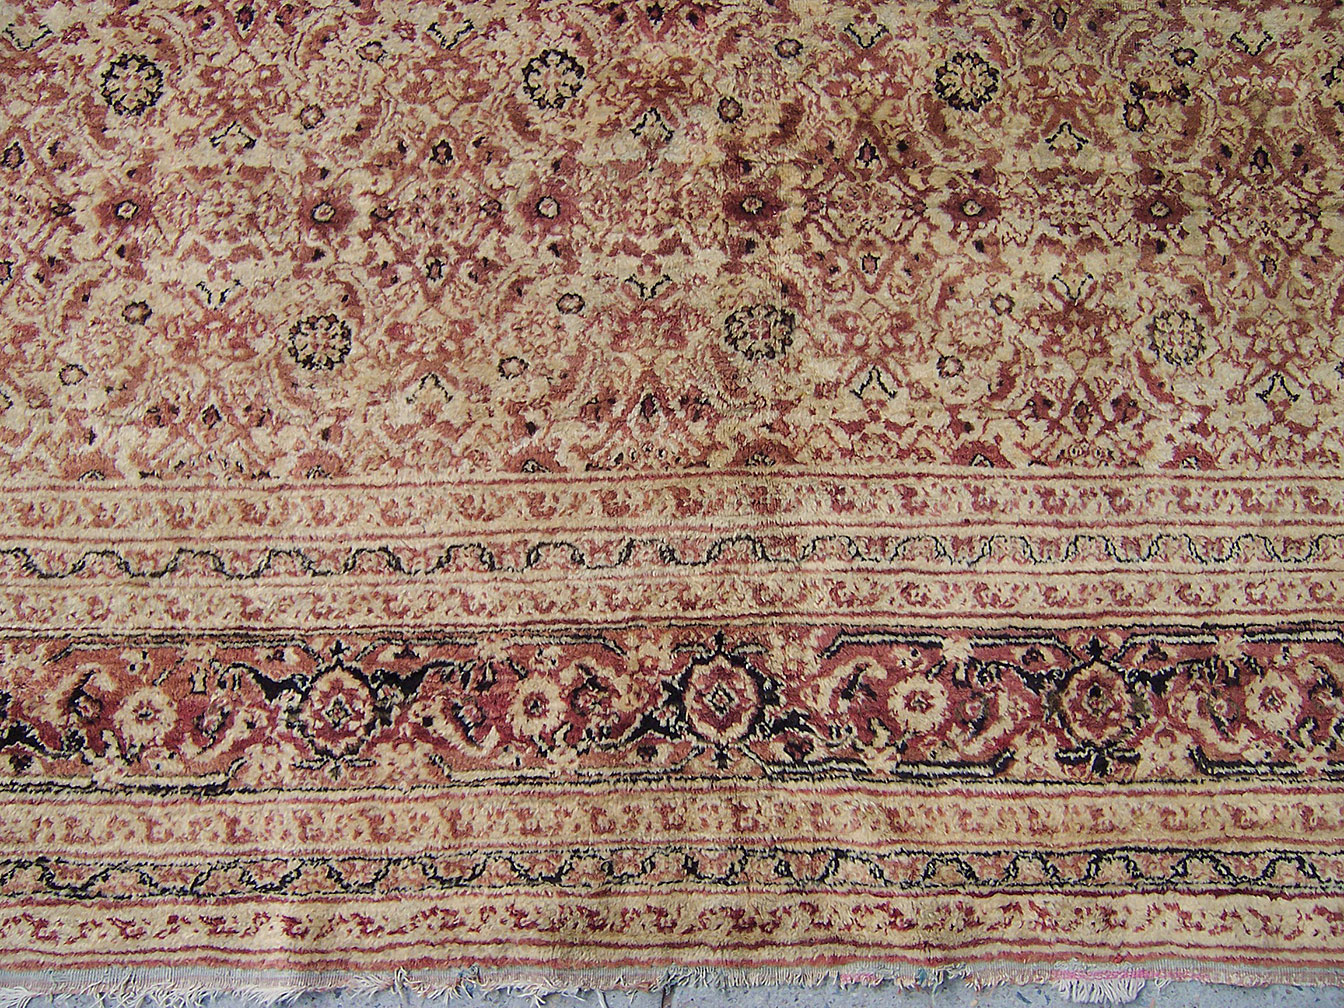 Antique amritsar Carpet - # 51517